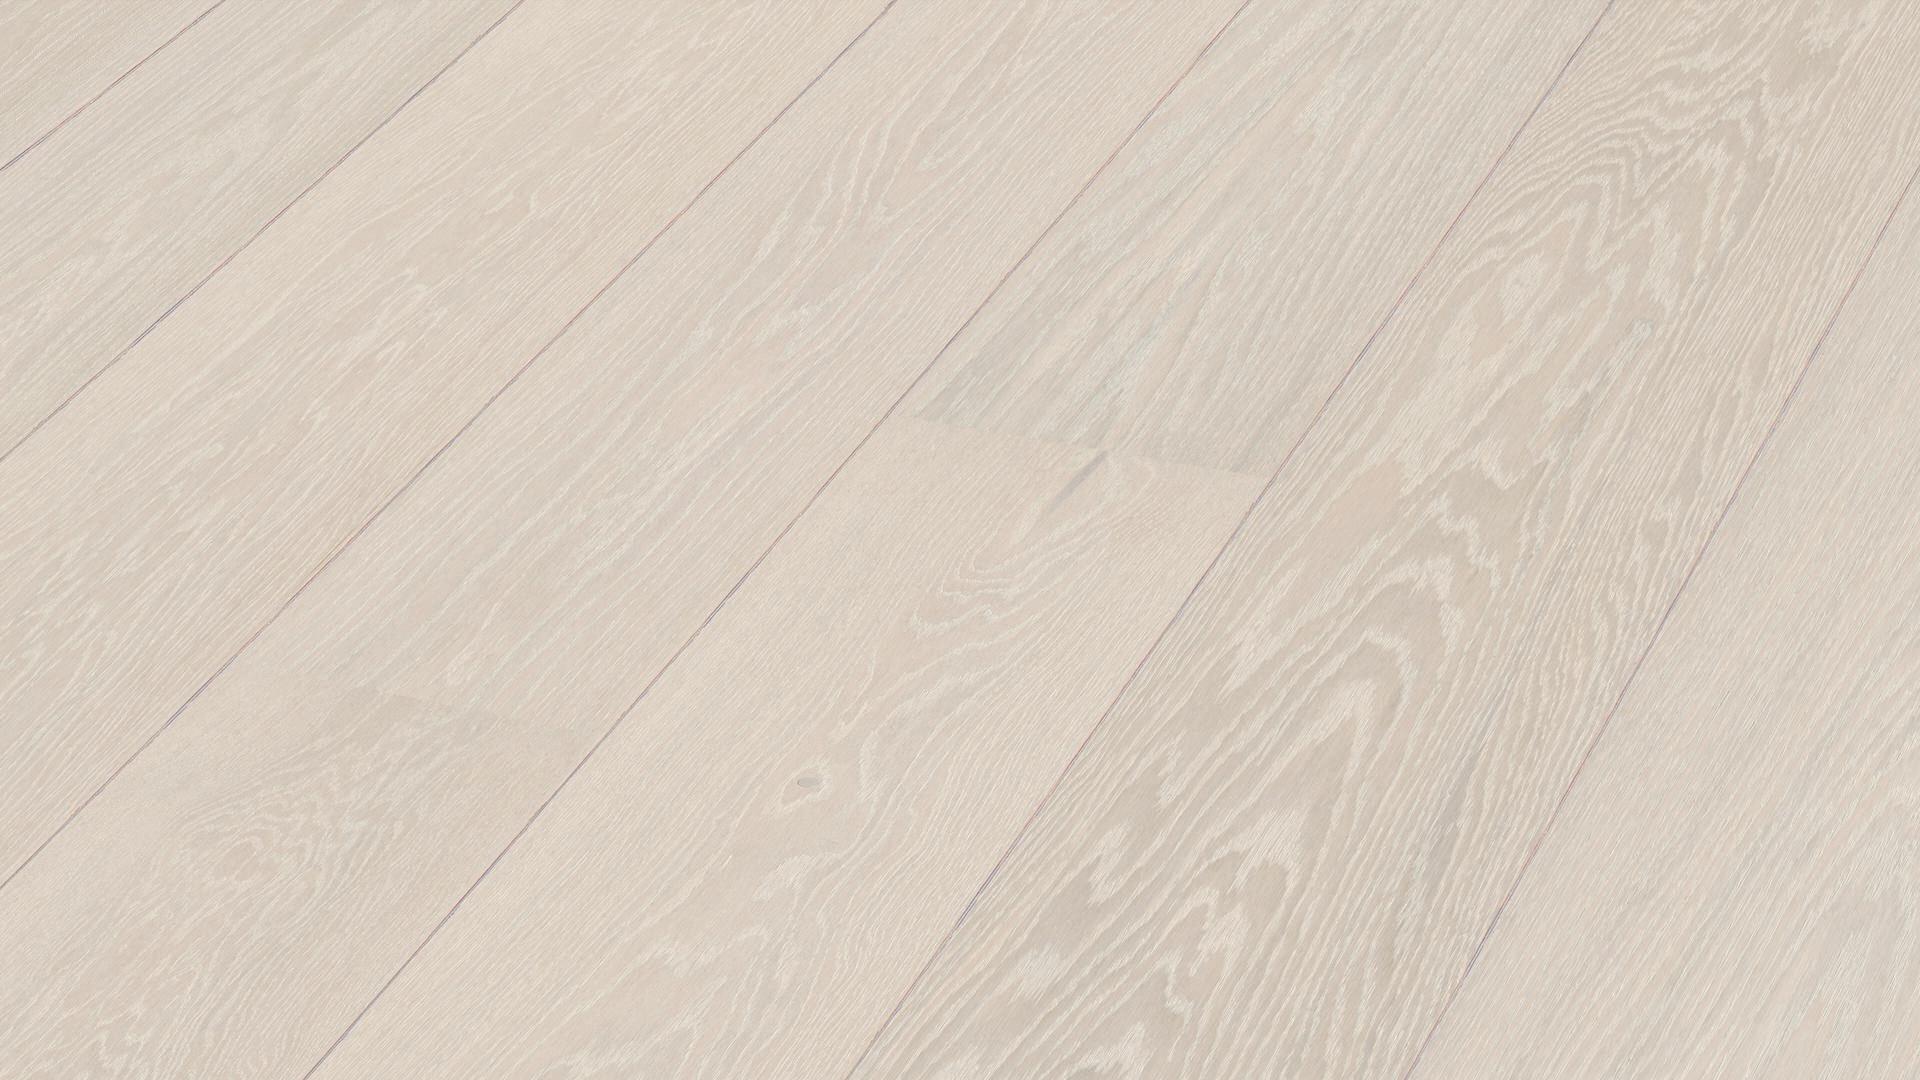 Lindura wood flooring HD 400 Natural polar white oak 8920